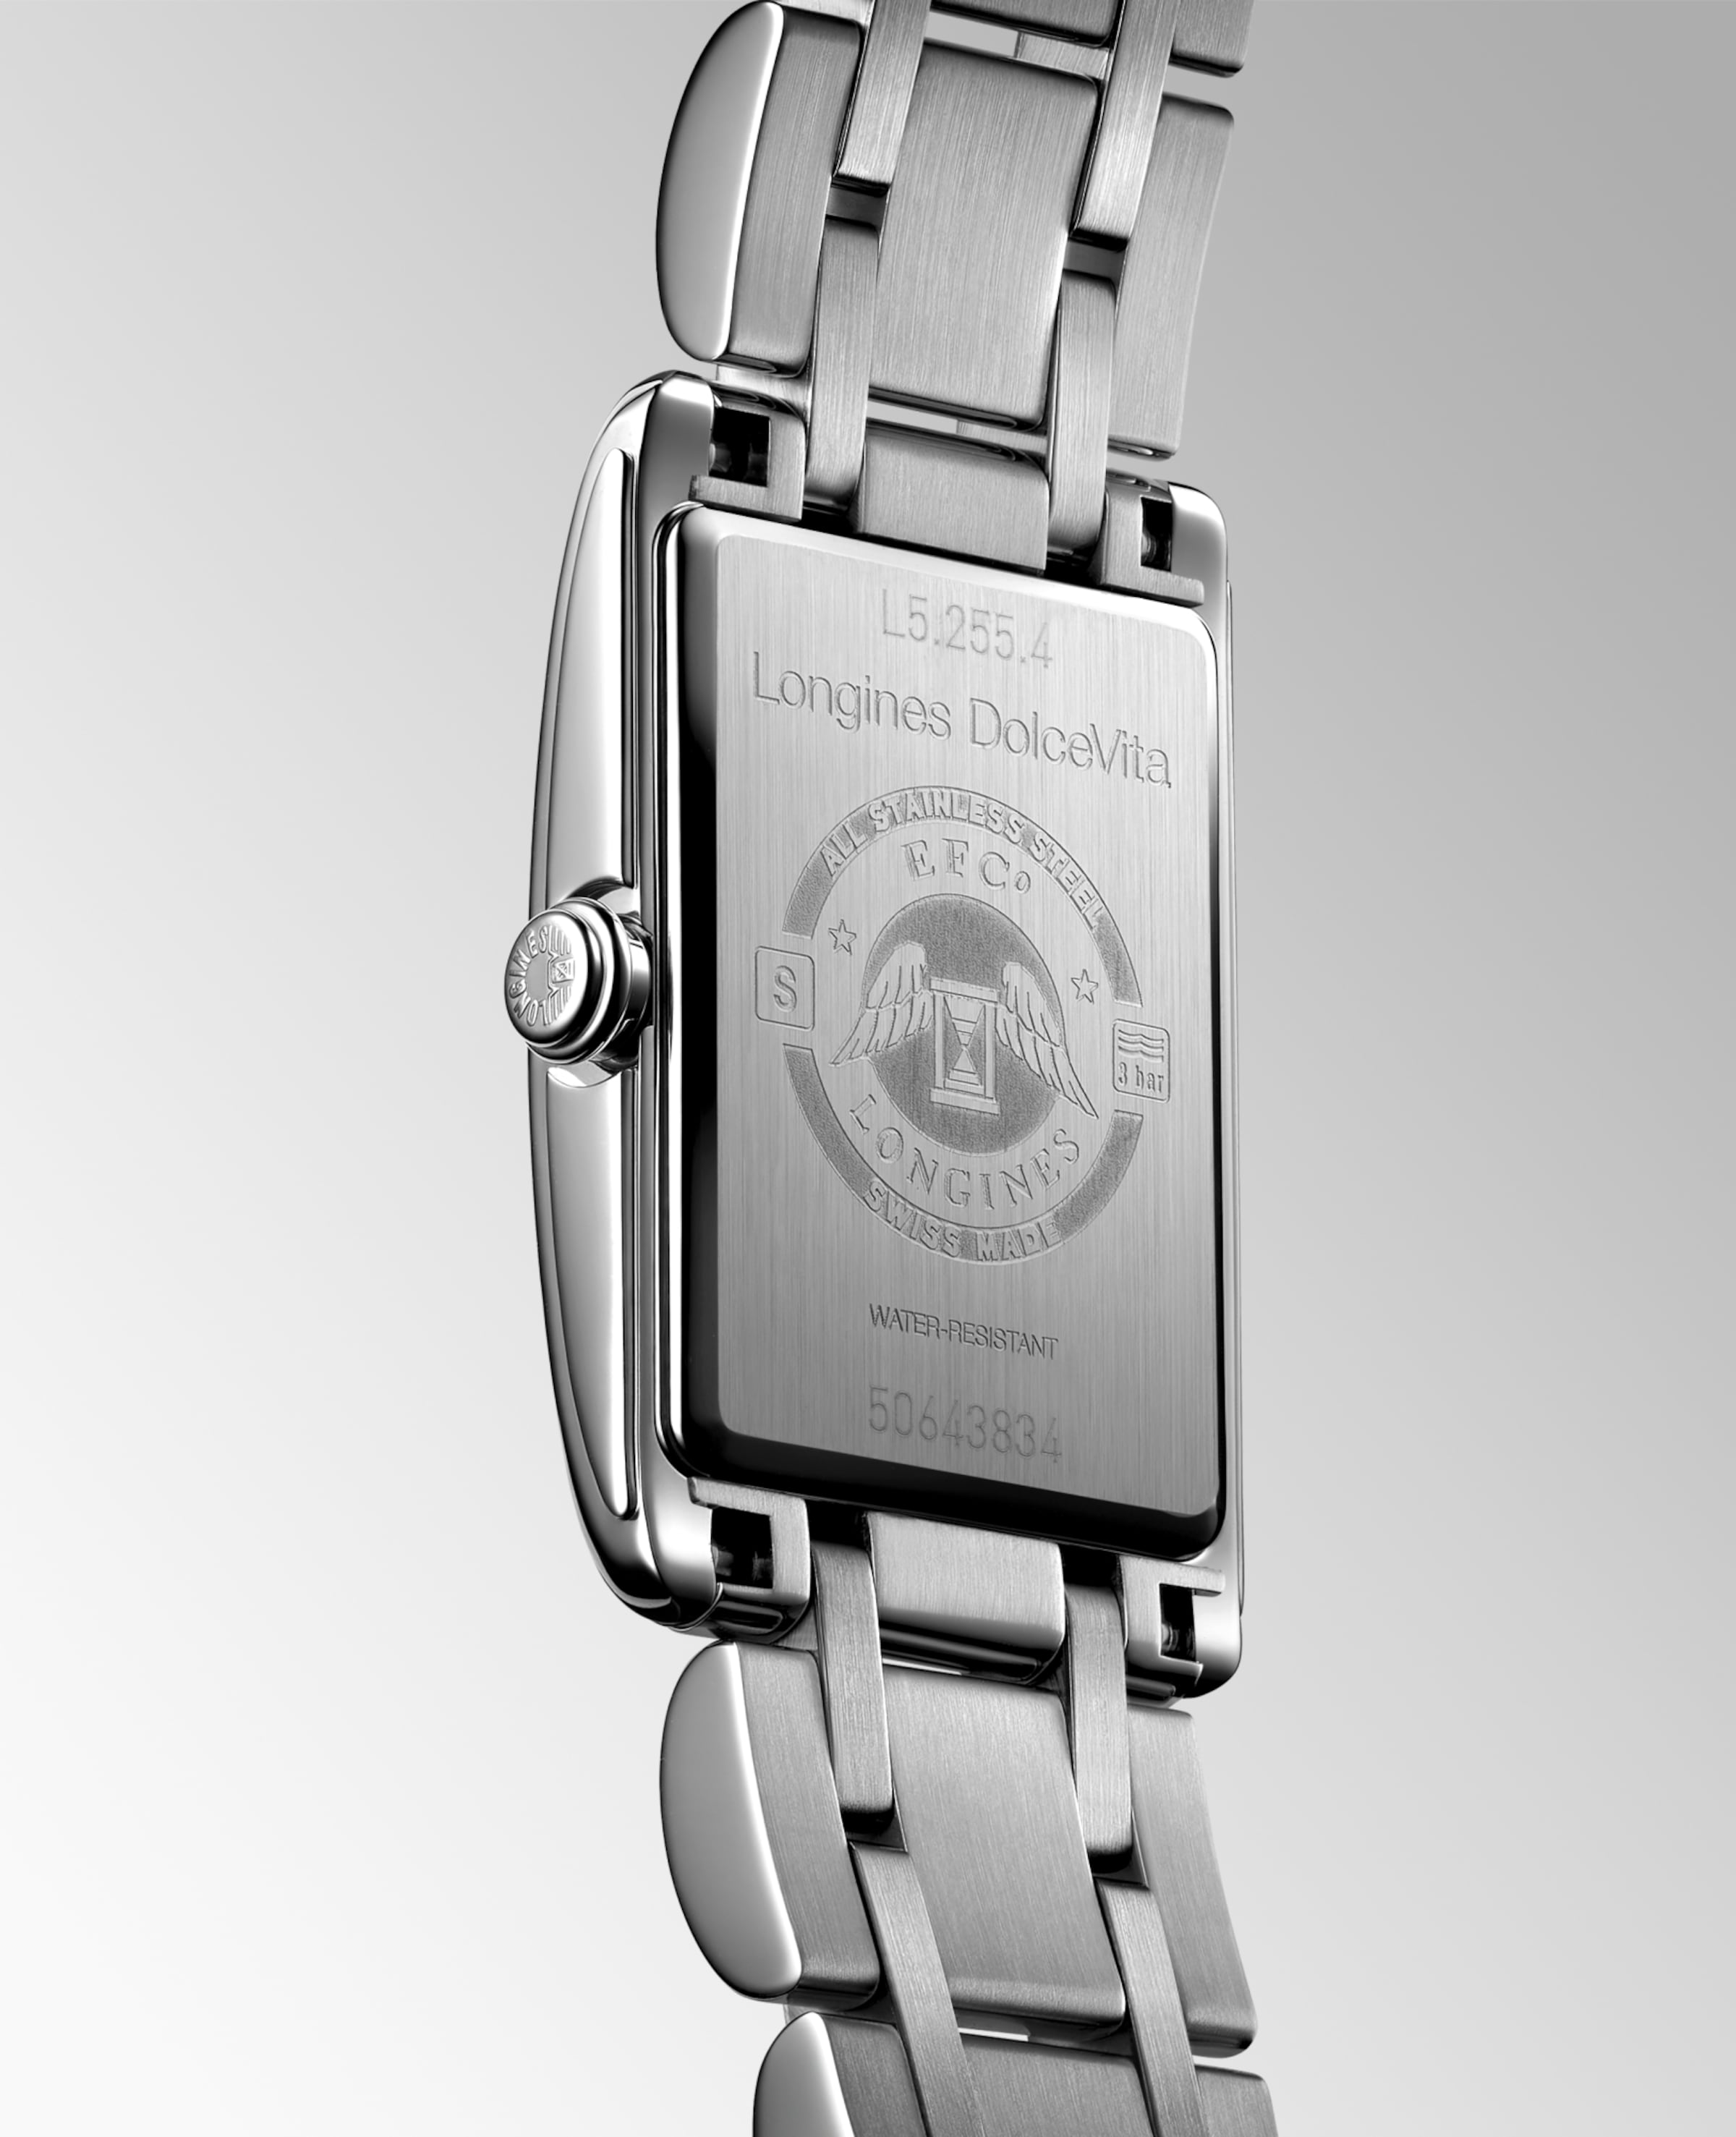 Longines DOLCEVITA Quartz Stainless steel Watch - L5.255.4.93.6